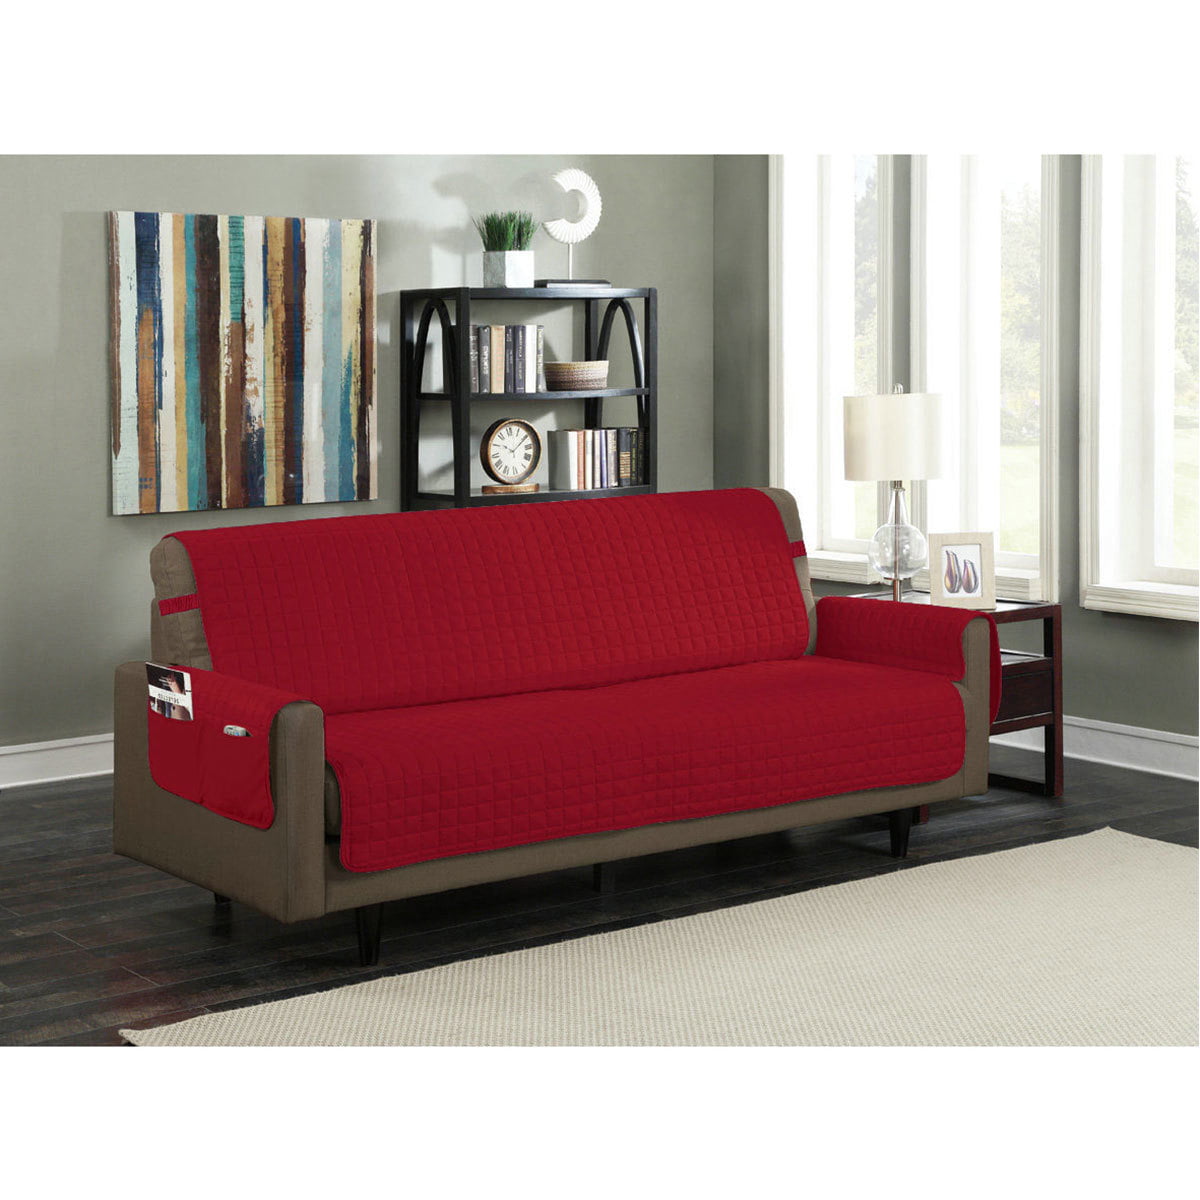 Camel Burgundy Reversible Microfiber Pet Dog Couch Furniture Protector 